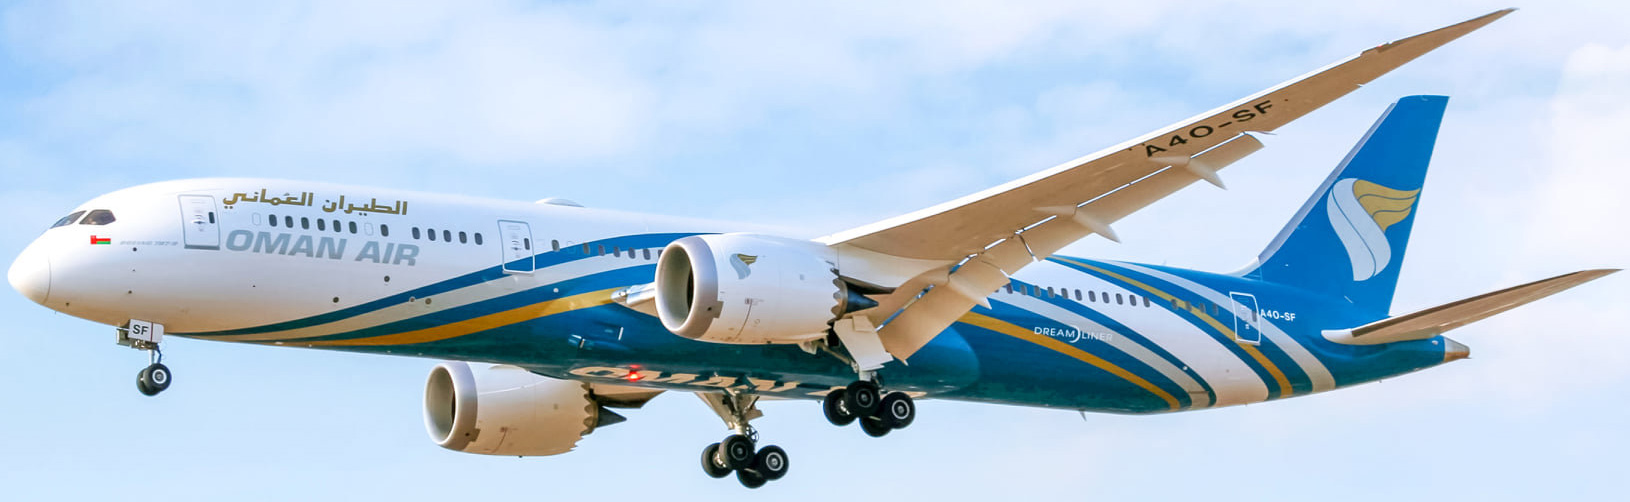 Oman air Boeing_787-9